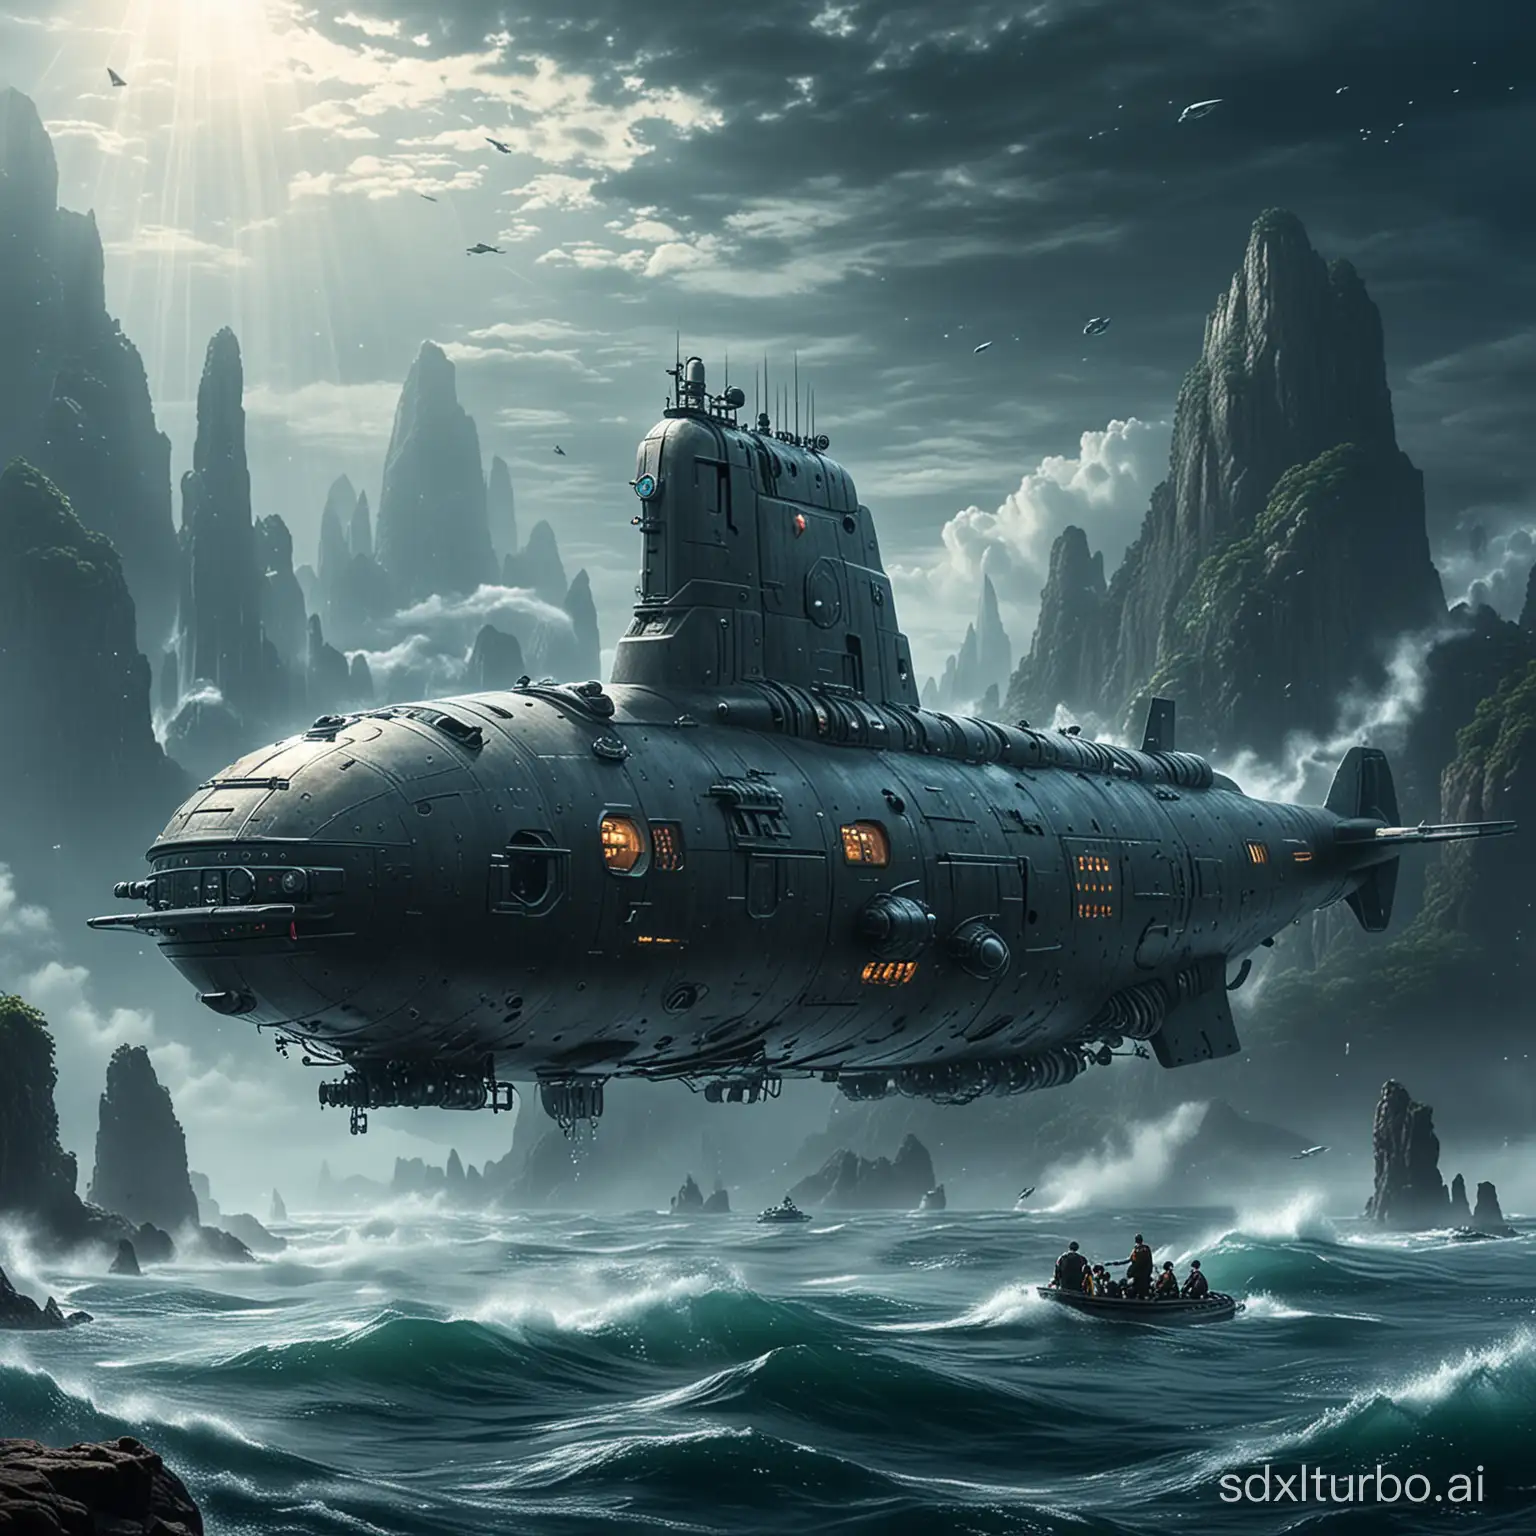 Jiaolong Submarine Science Fiction